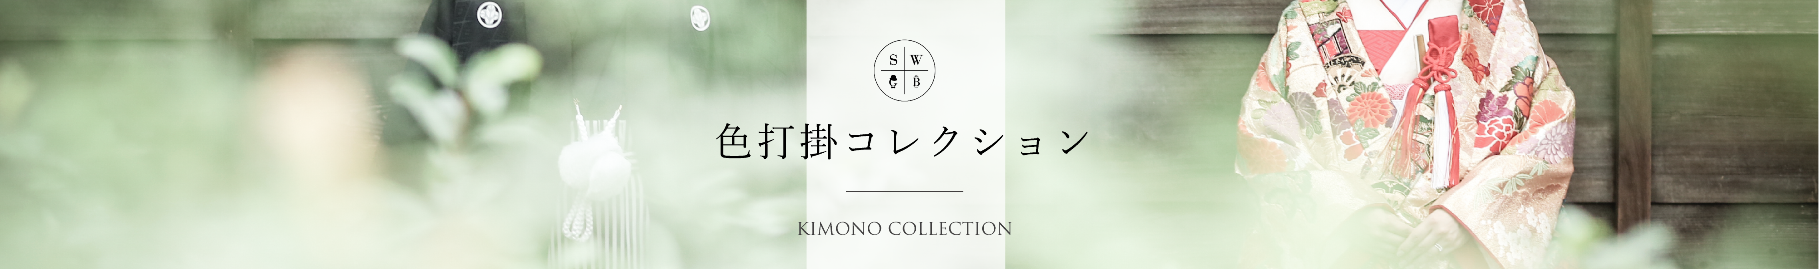 kimono collection ttl